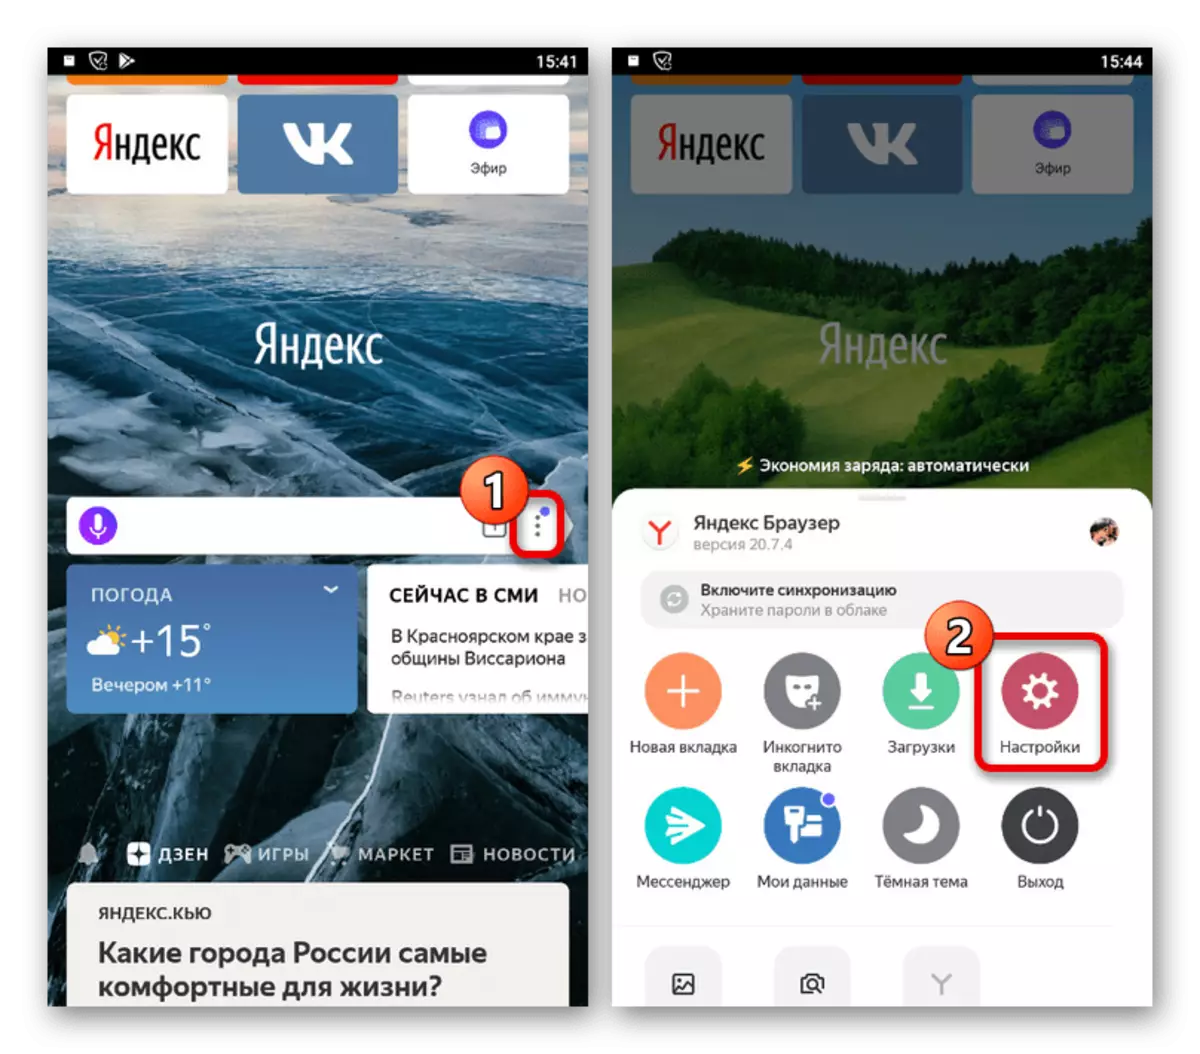 Yandex.brower ۾ Yandex.brower ۾ سيٽنگون وڃو